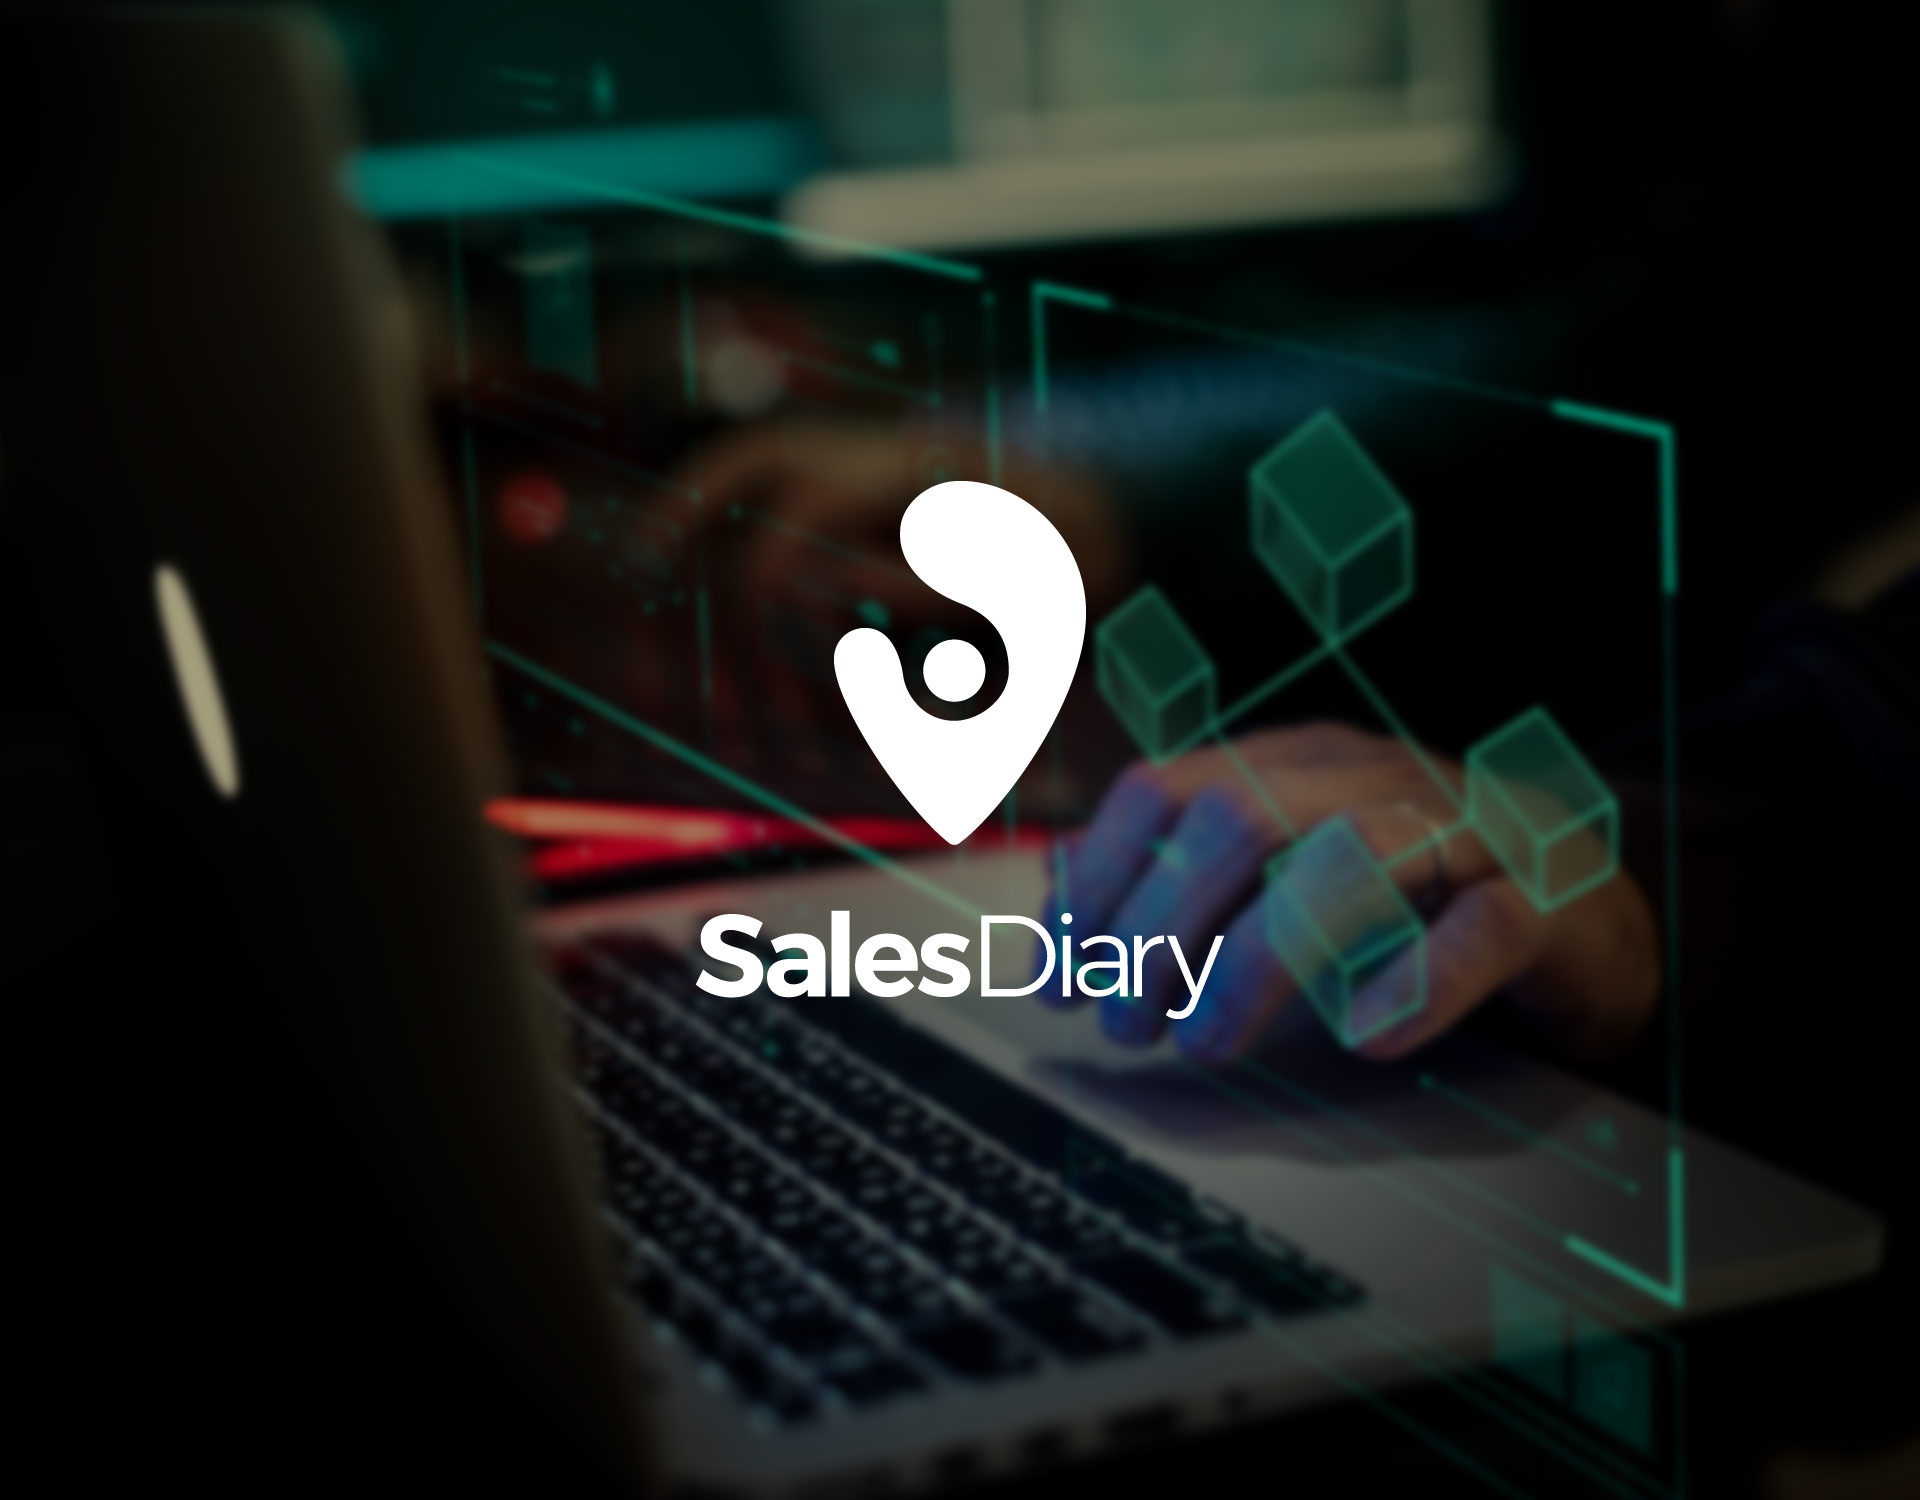 SalesDiary – Brand Identity